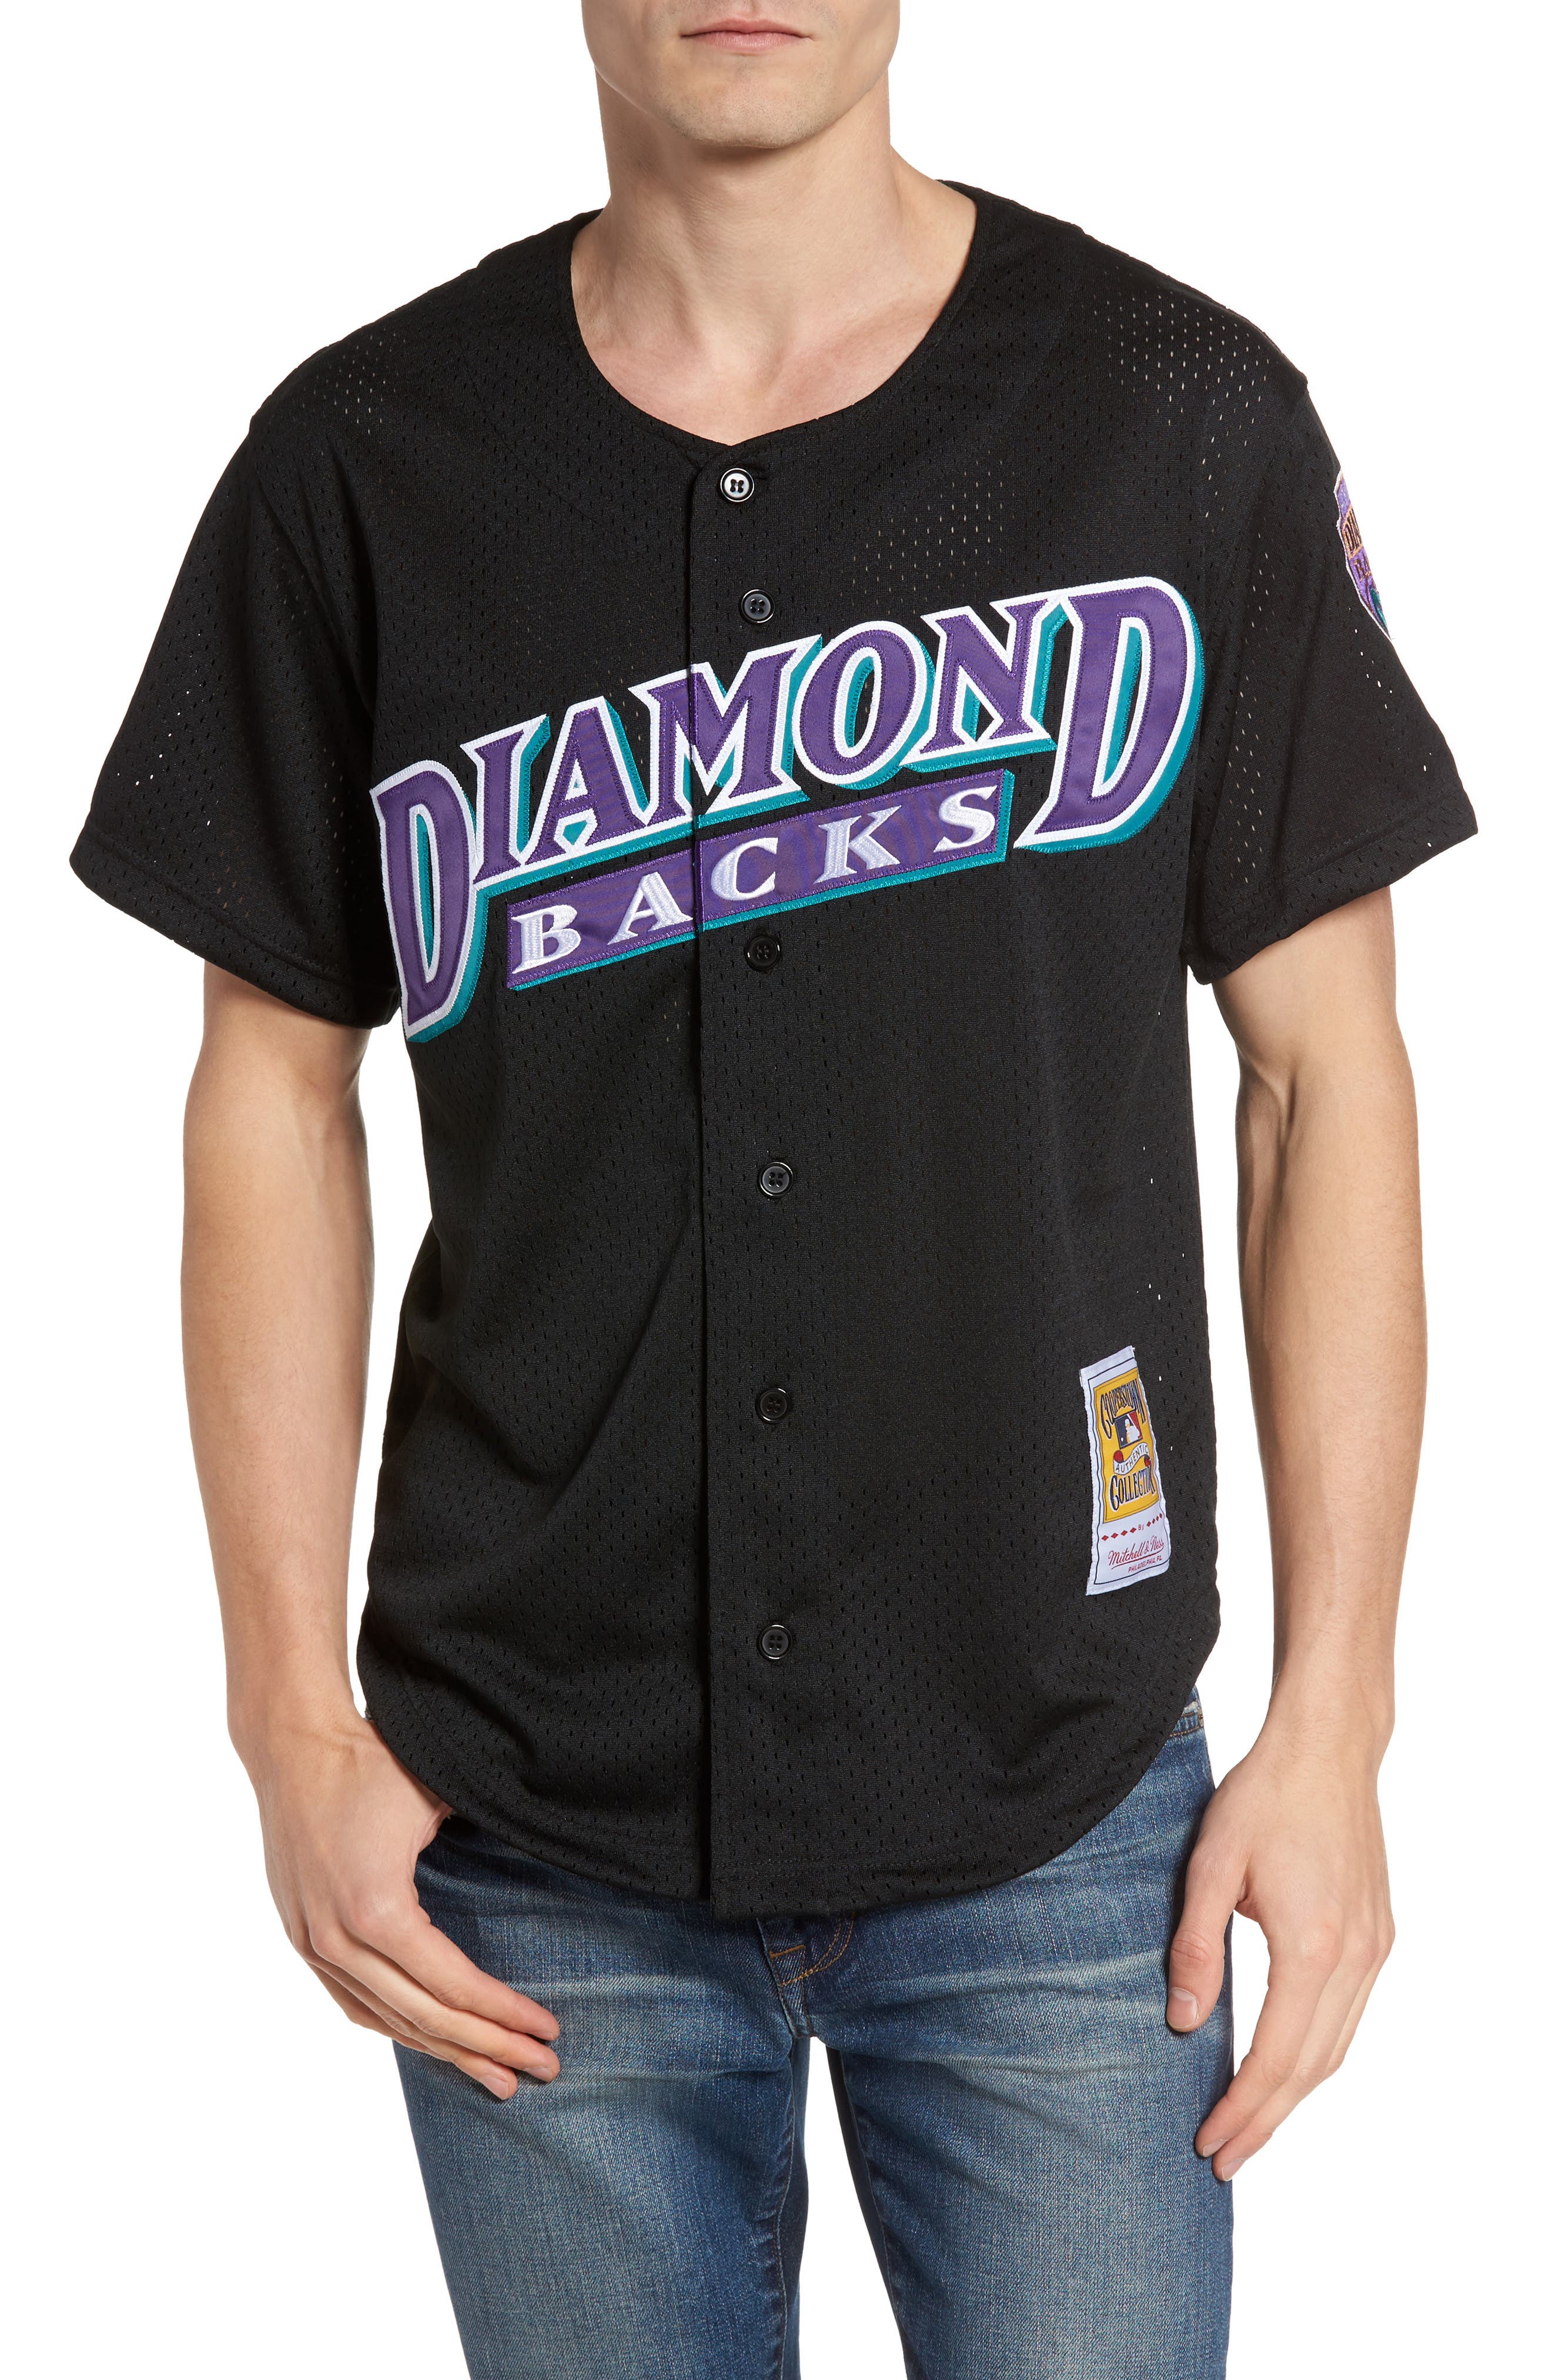 randy johnson arizona diamondbacks jersey